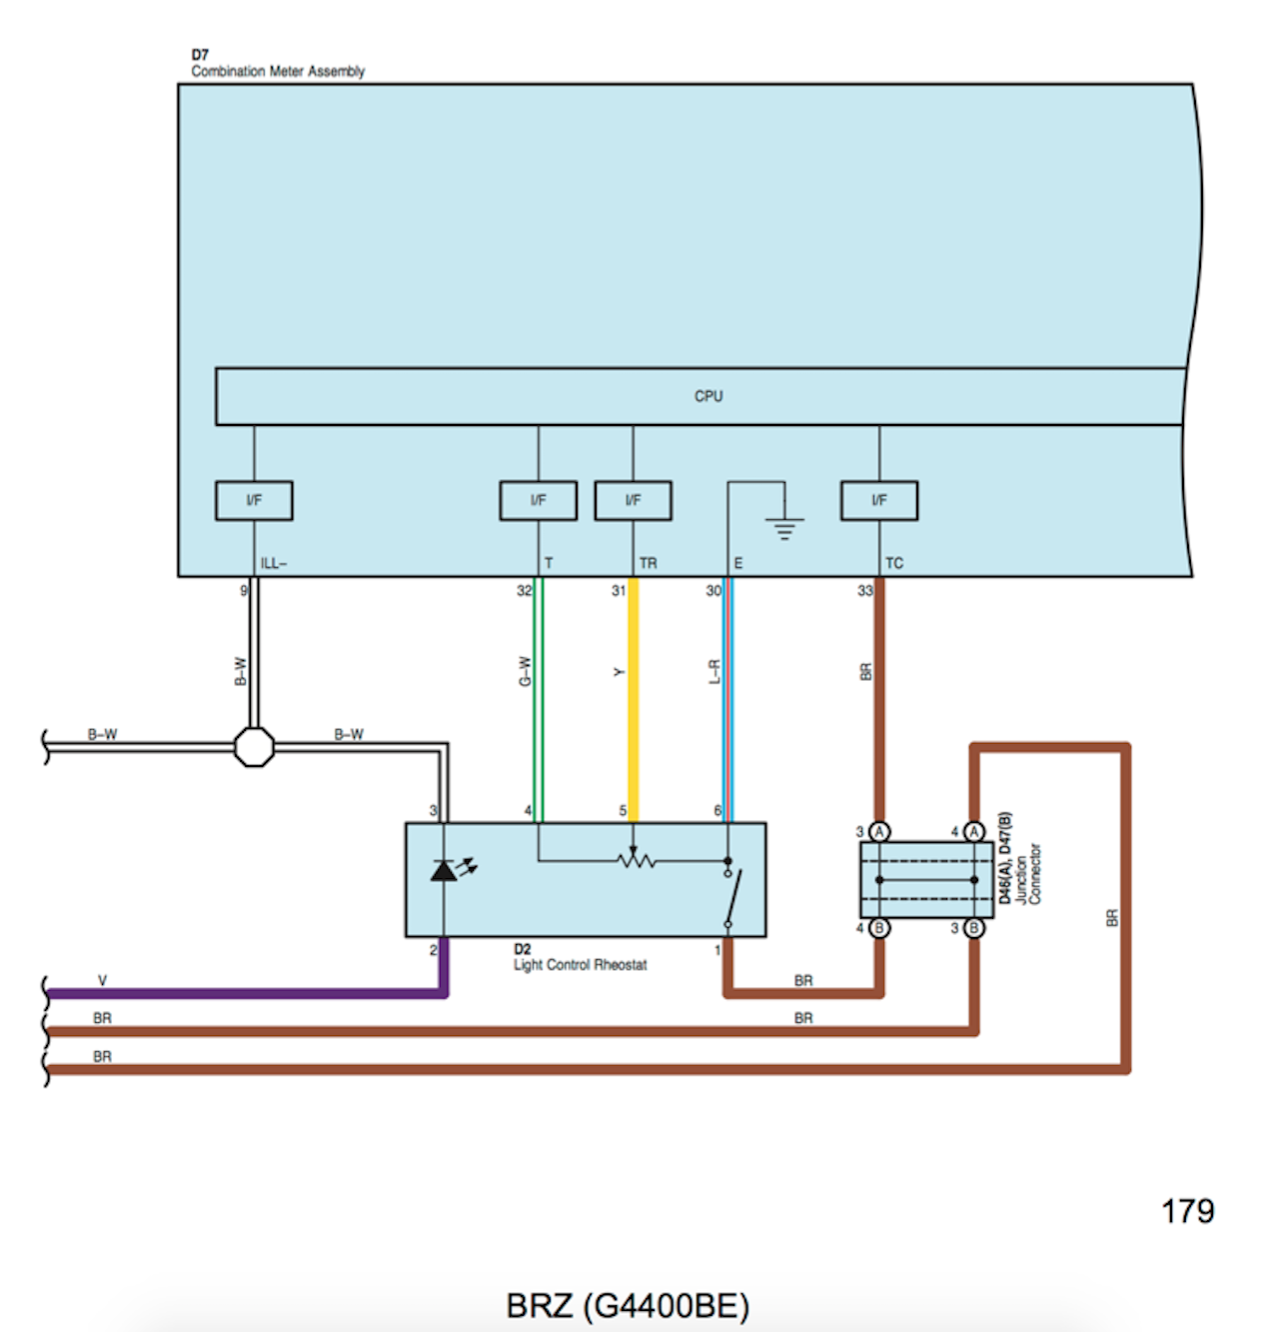 Scion Tc Engine Diagram - Complete Wiring Schemas